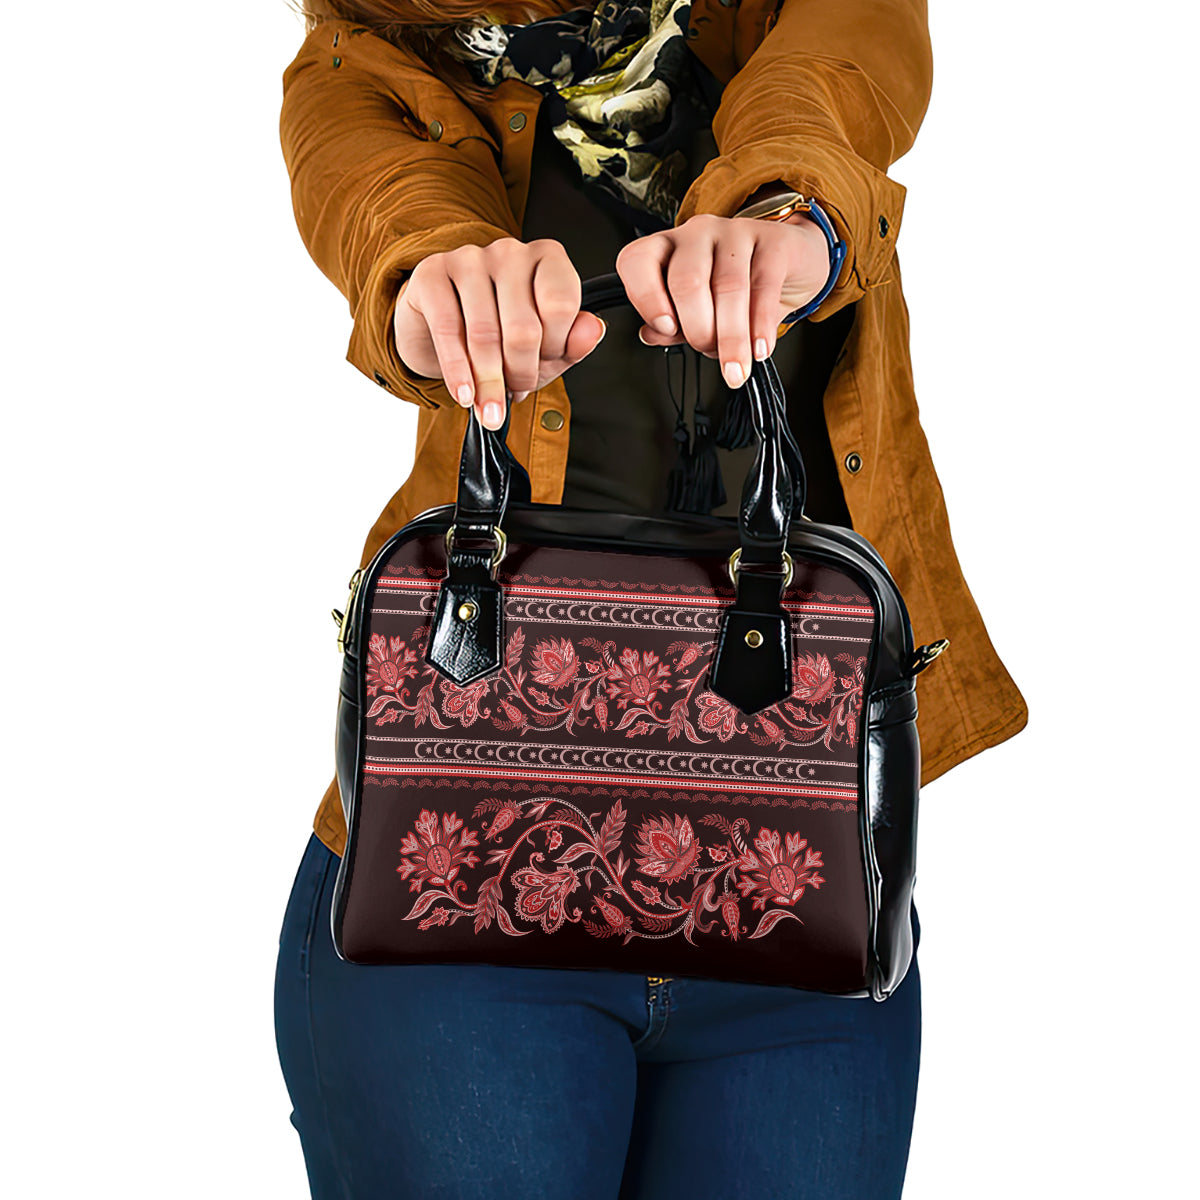 azerbaijan-shoulder-handbag-traditional-pattern-ornament-with-flowers-buta-red